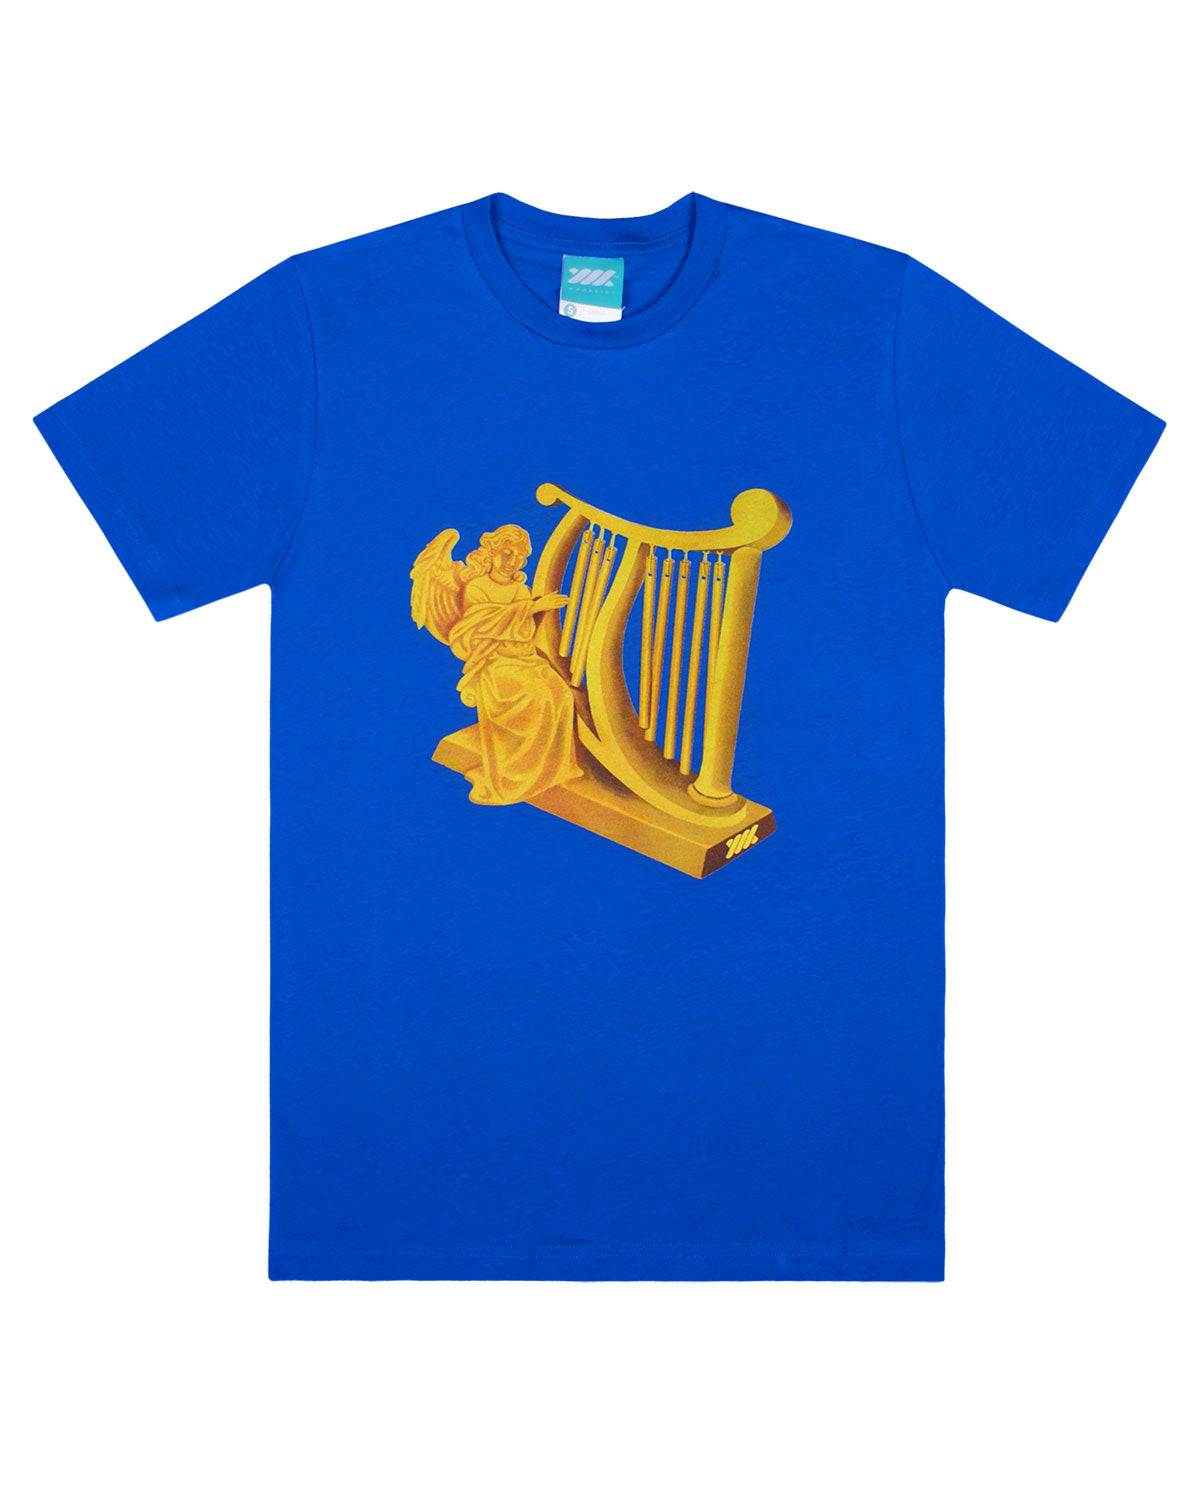 Wadezig! T-Shirt - Instrument Tee Blue